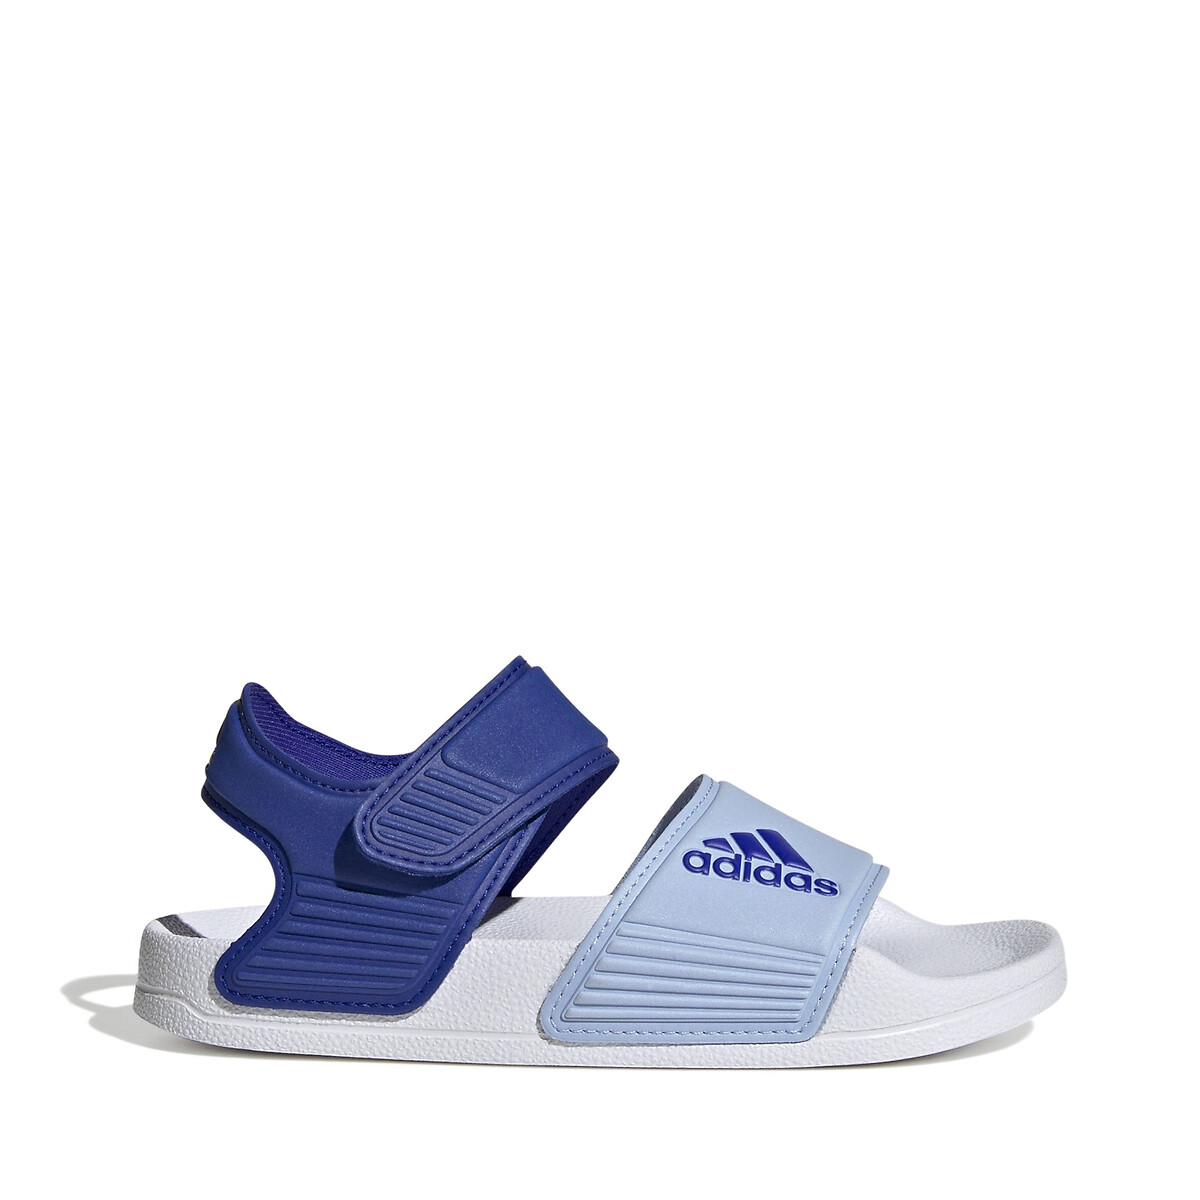 Groot universum Chemicaliën verdrietig Sandalen adilette blauw Adidas Sportswear | La Redoute